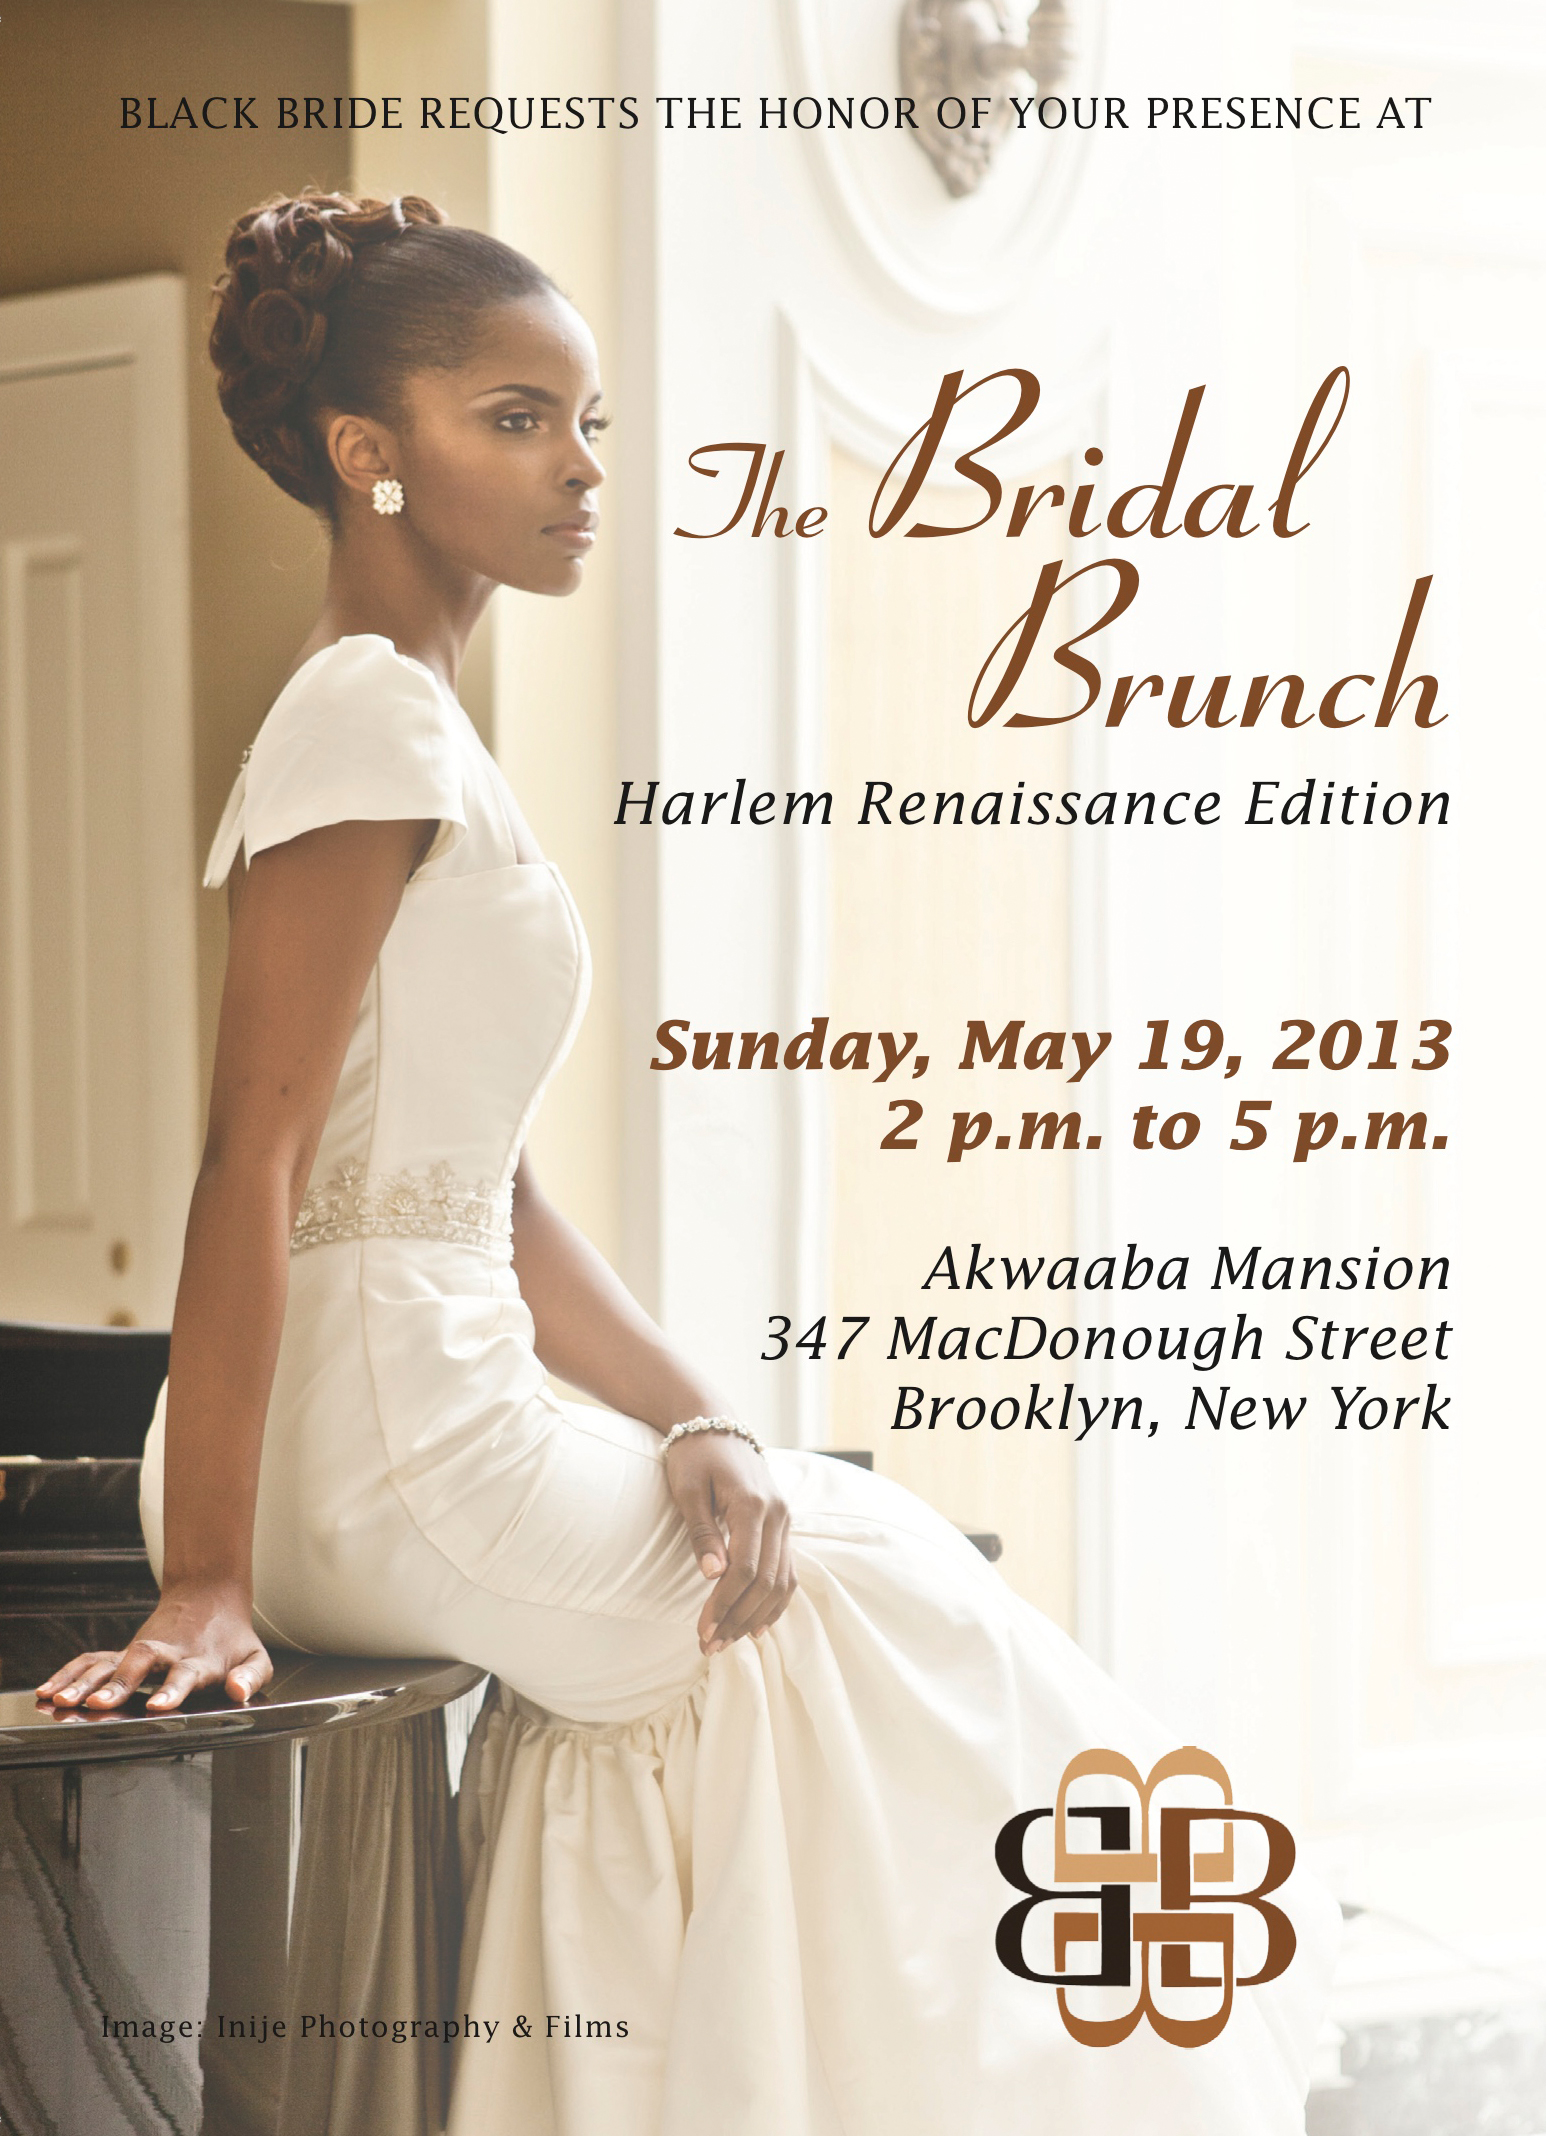 The Bridal Brunch NYC by Black Bride